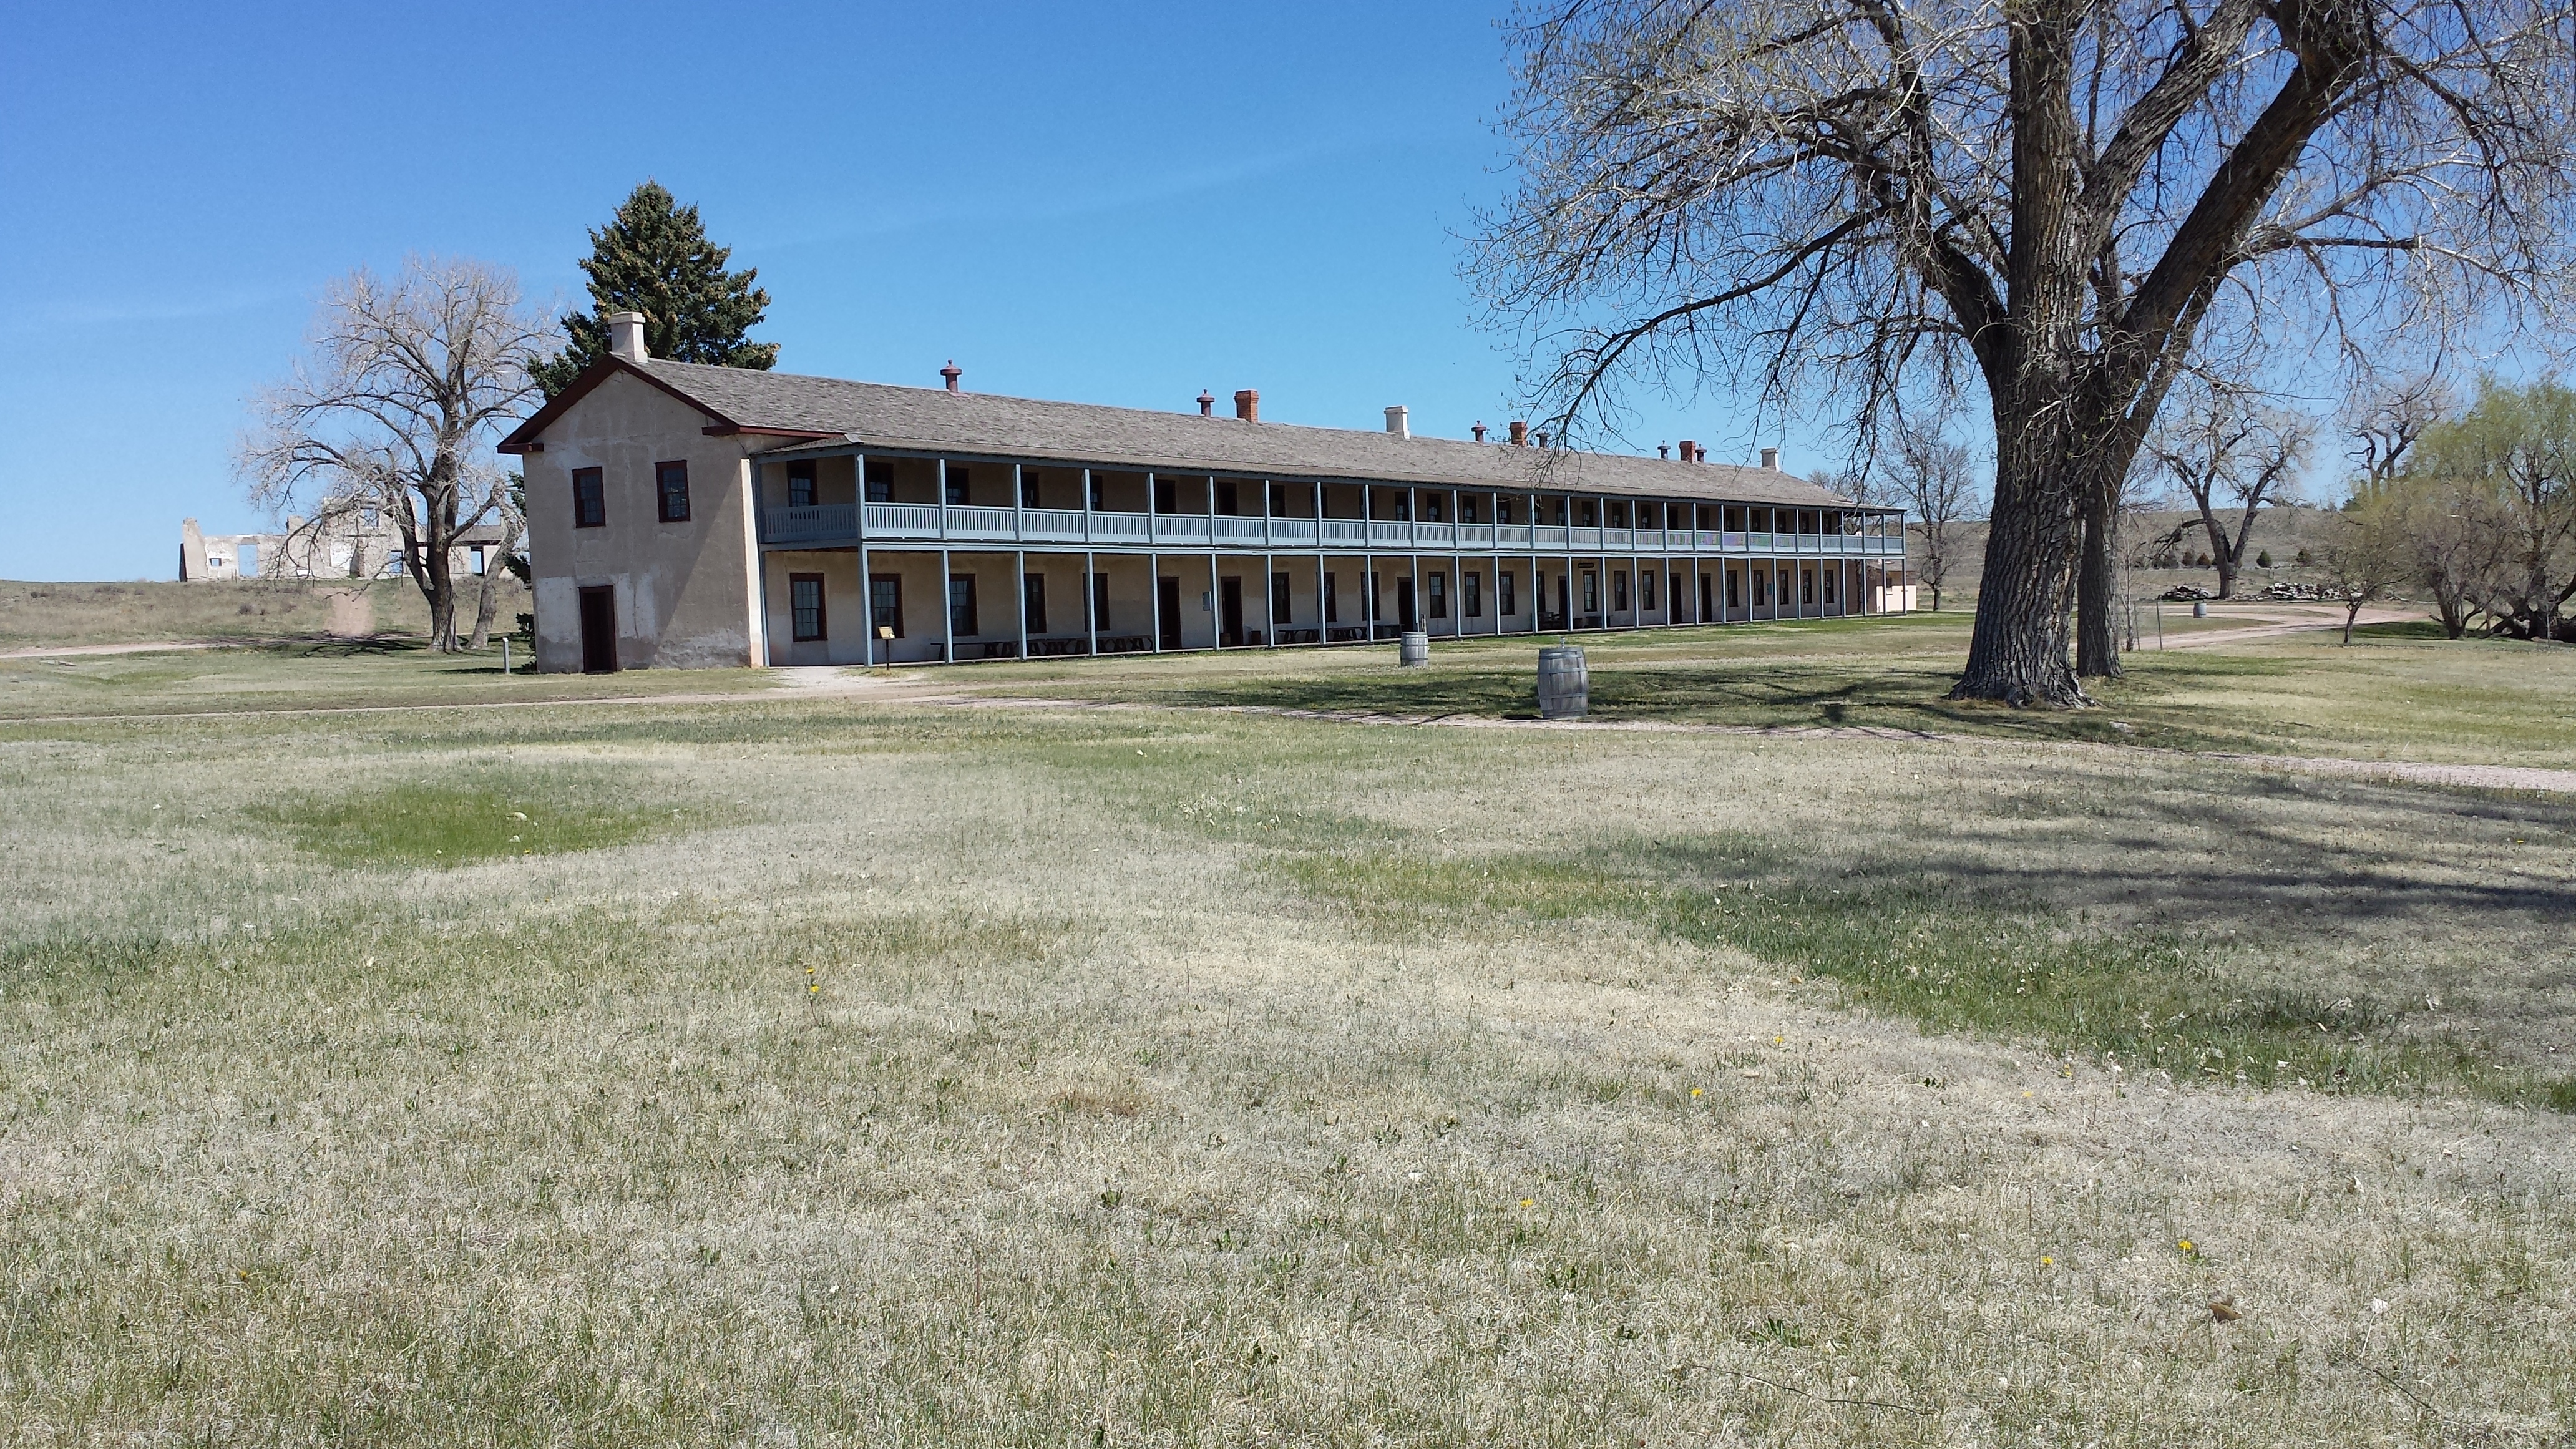 Reconstructed barracks at Ft. Laramie